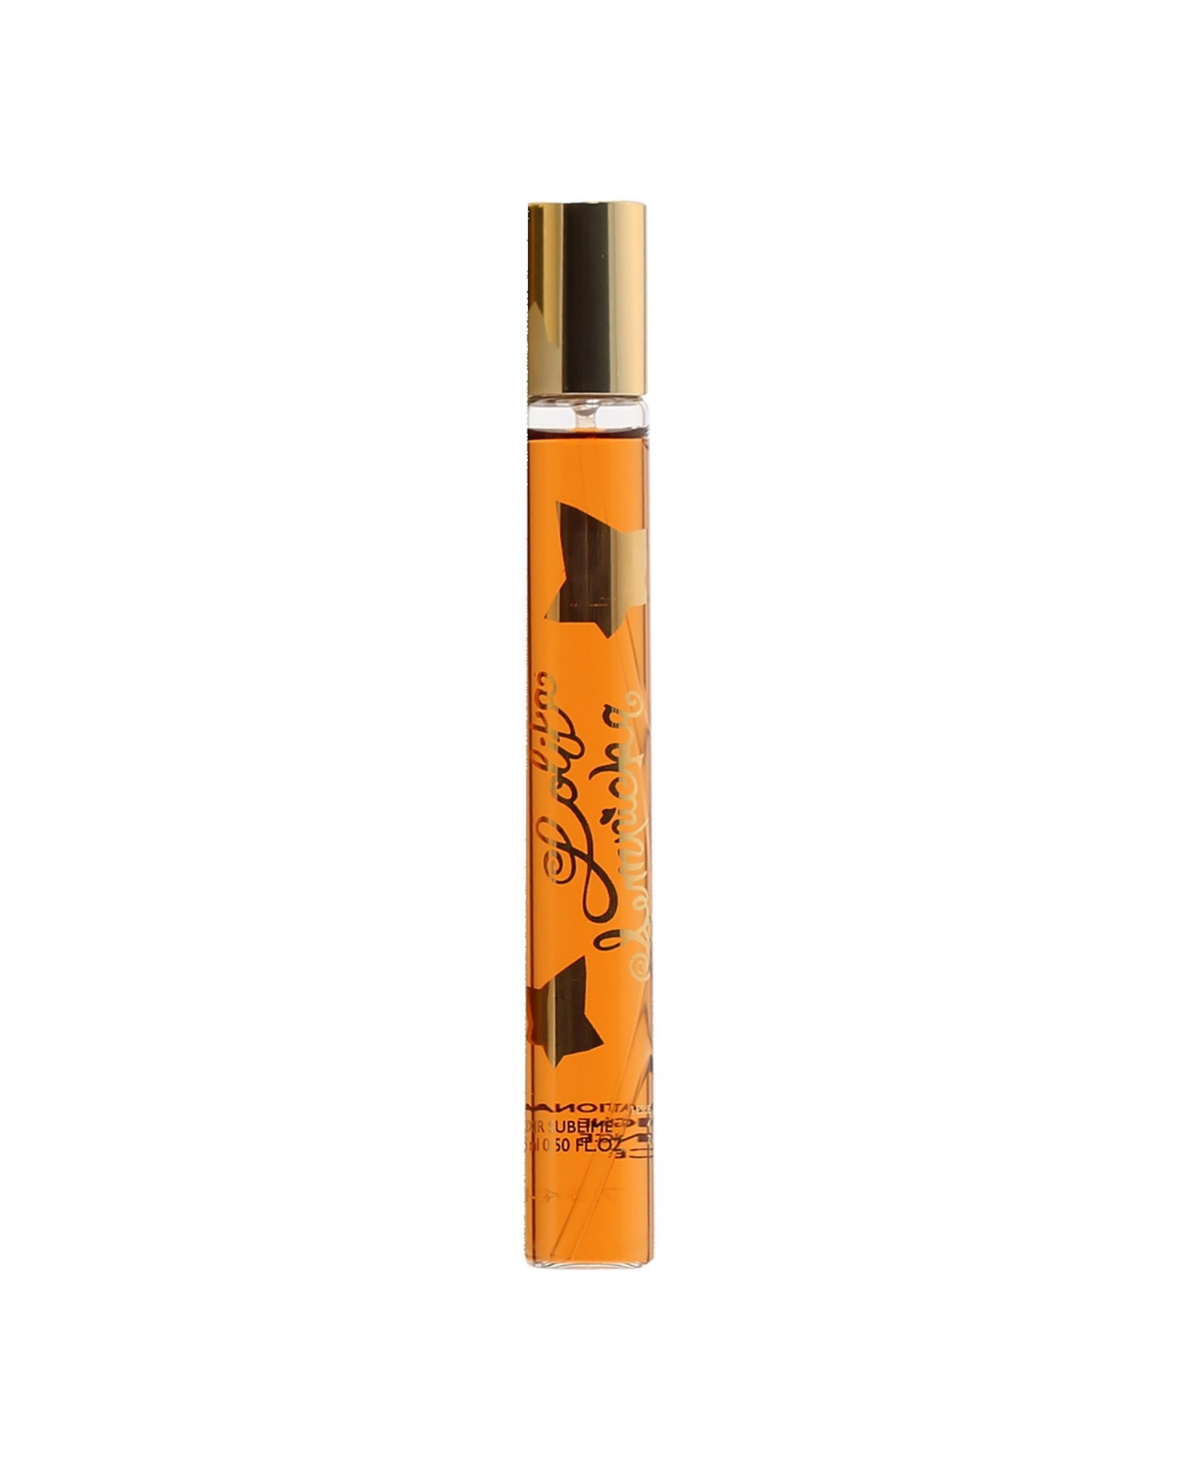 Lolita Lempicka Elixir Sublime Eau De Parfum Spray, 0.50 fl oz